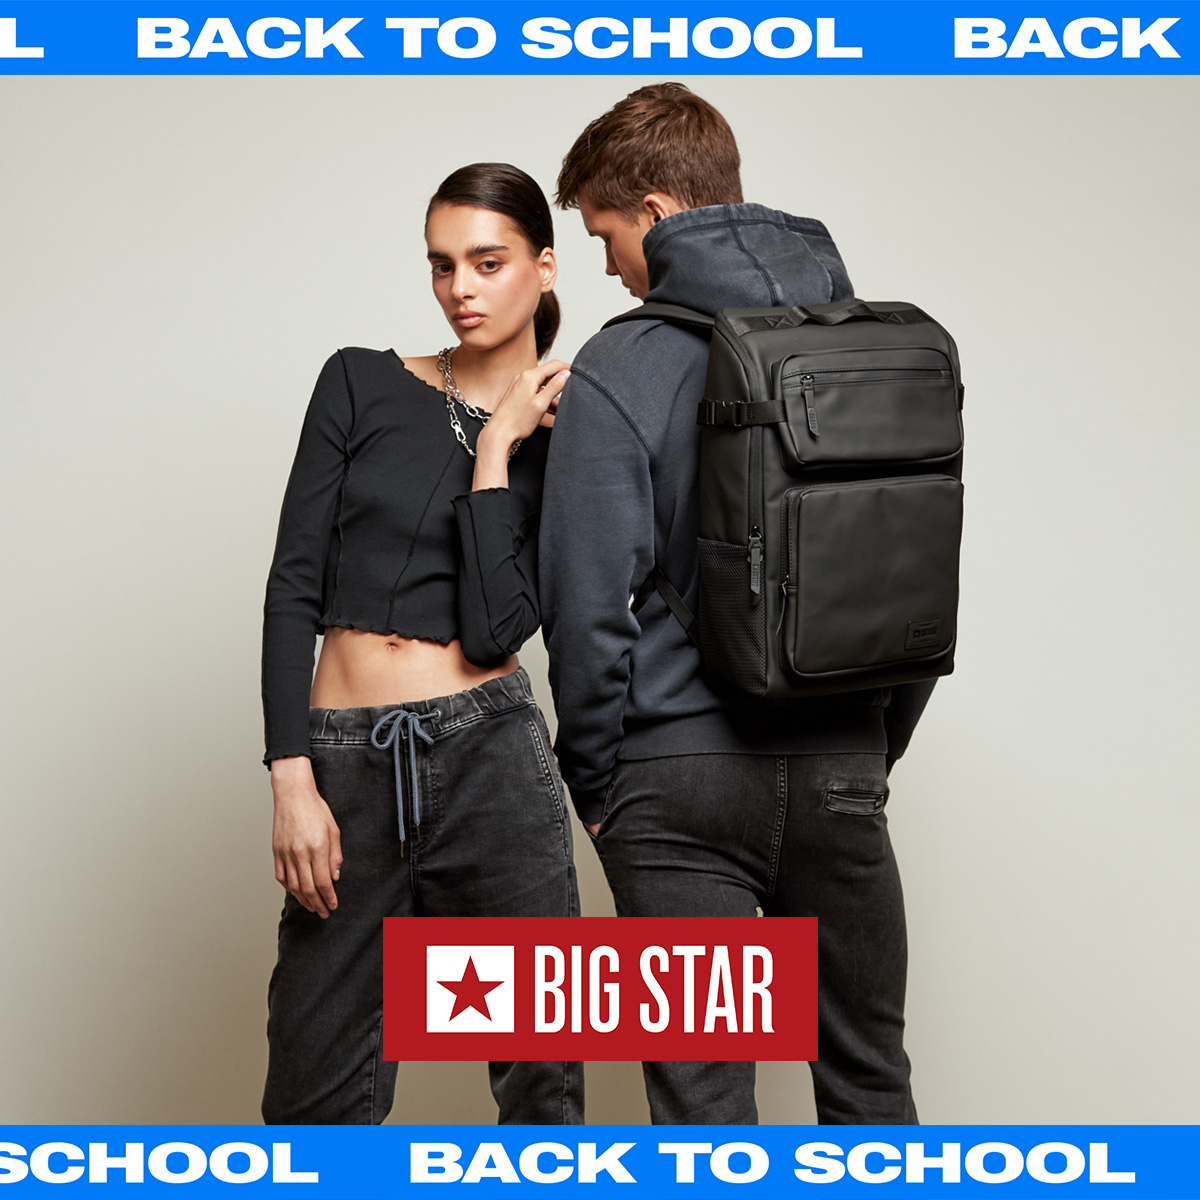 BIG STAR: back to school